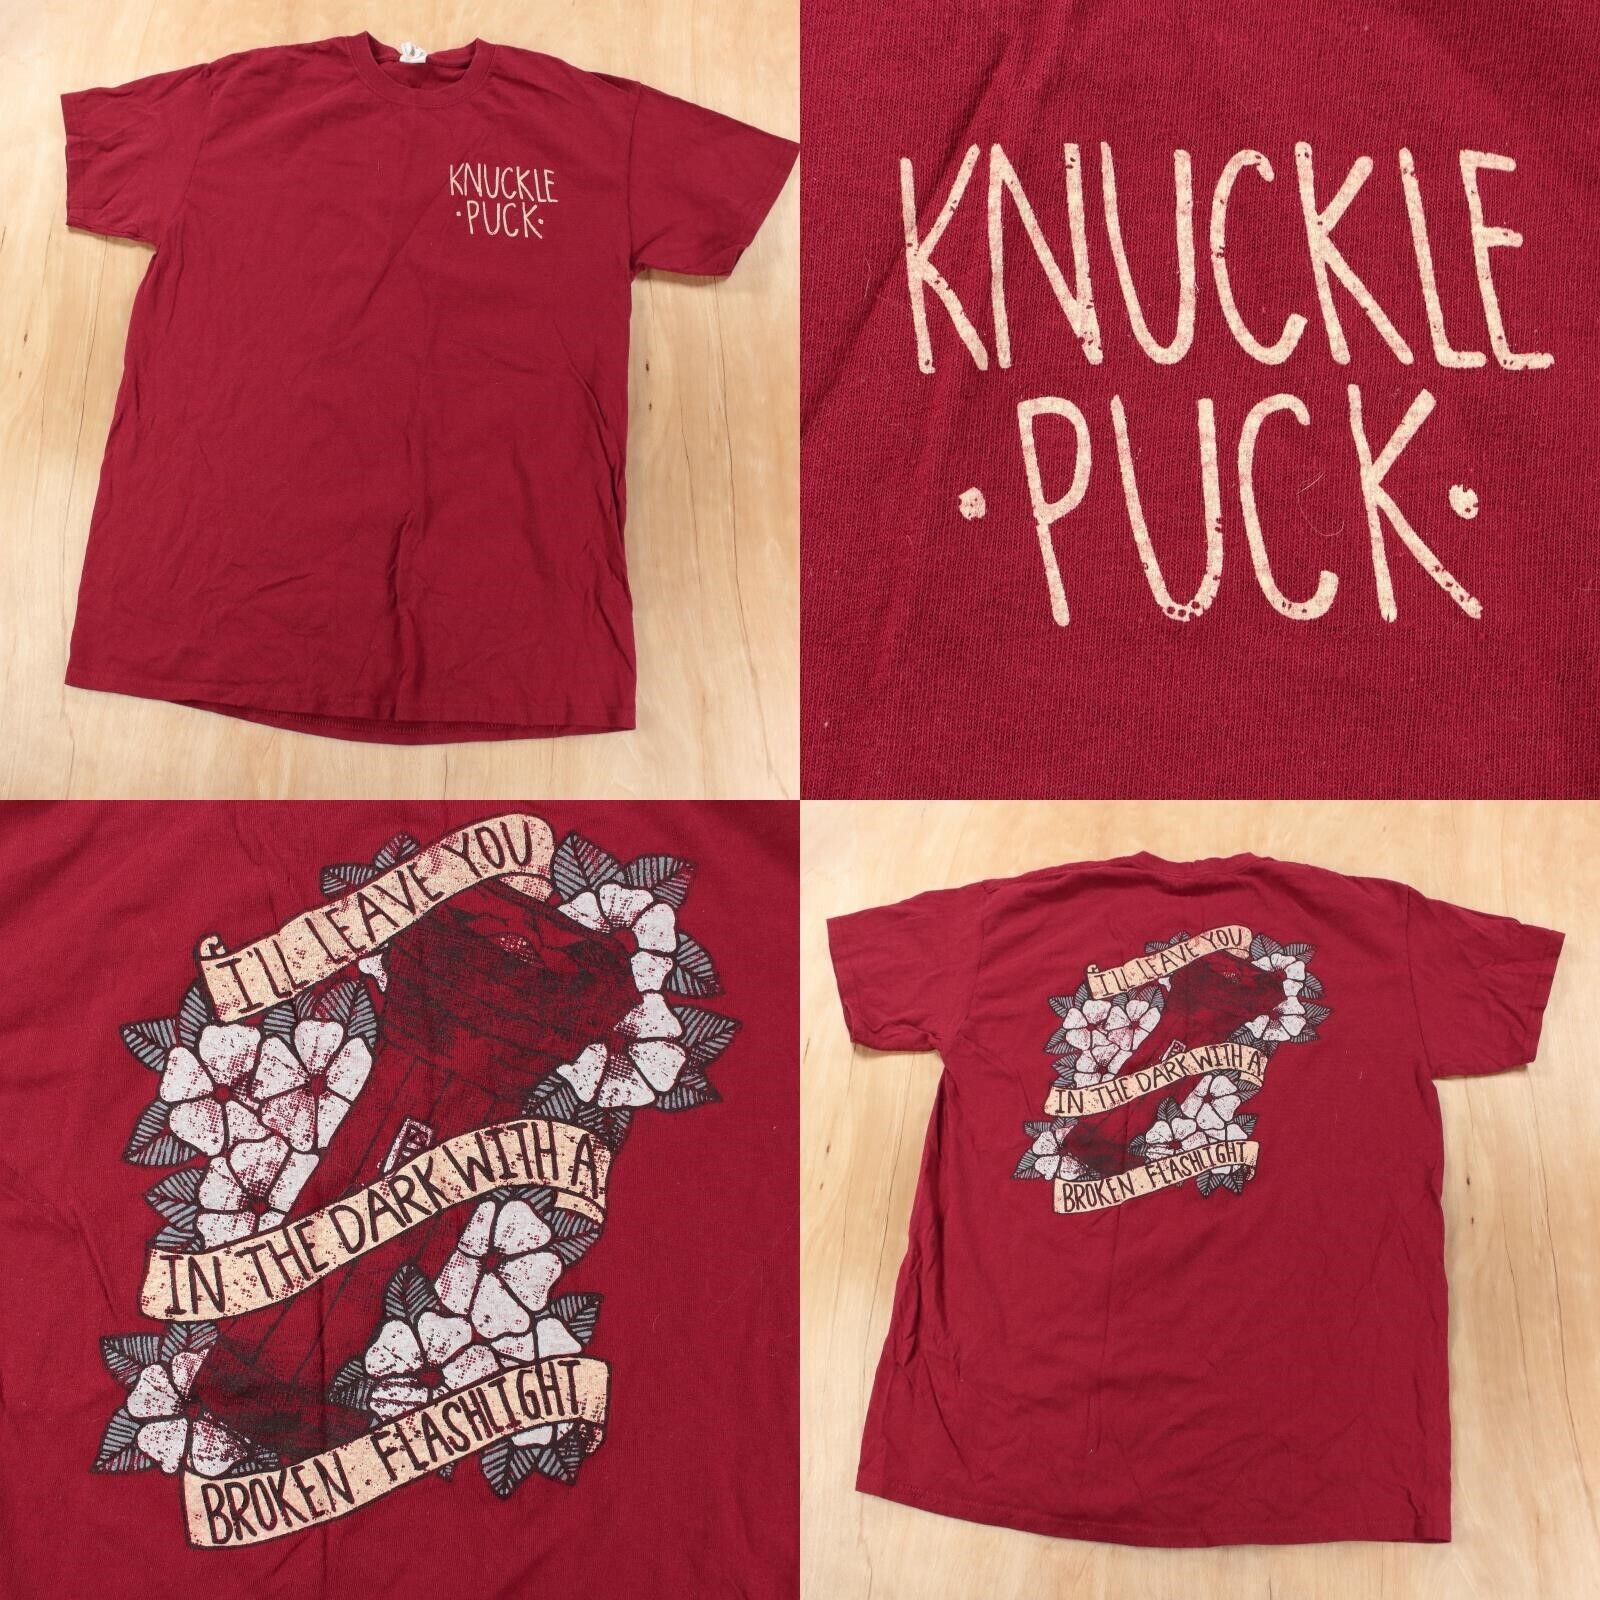 Knuckle Puck Pretense song lyrics t-shirt MEDIUM … - image 1